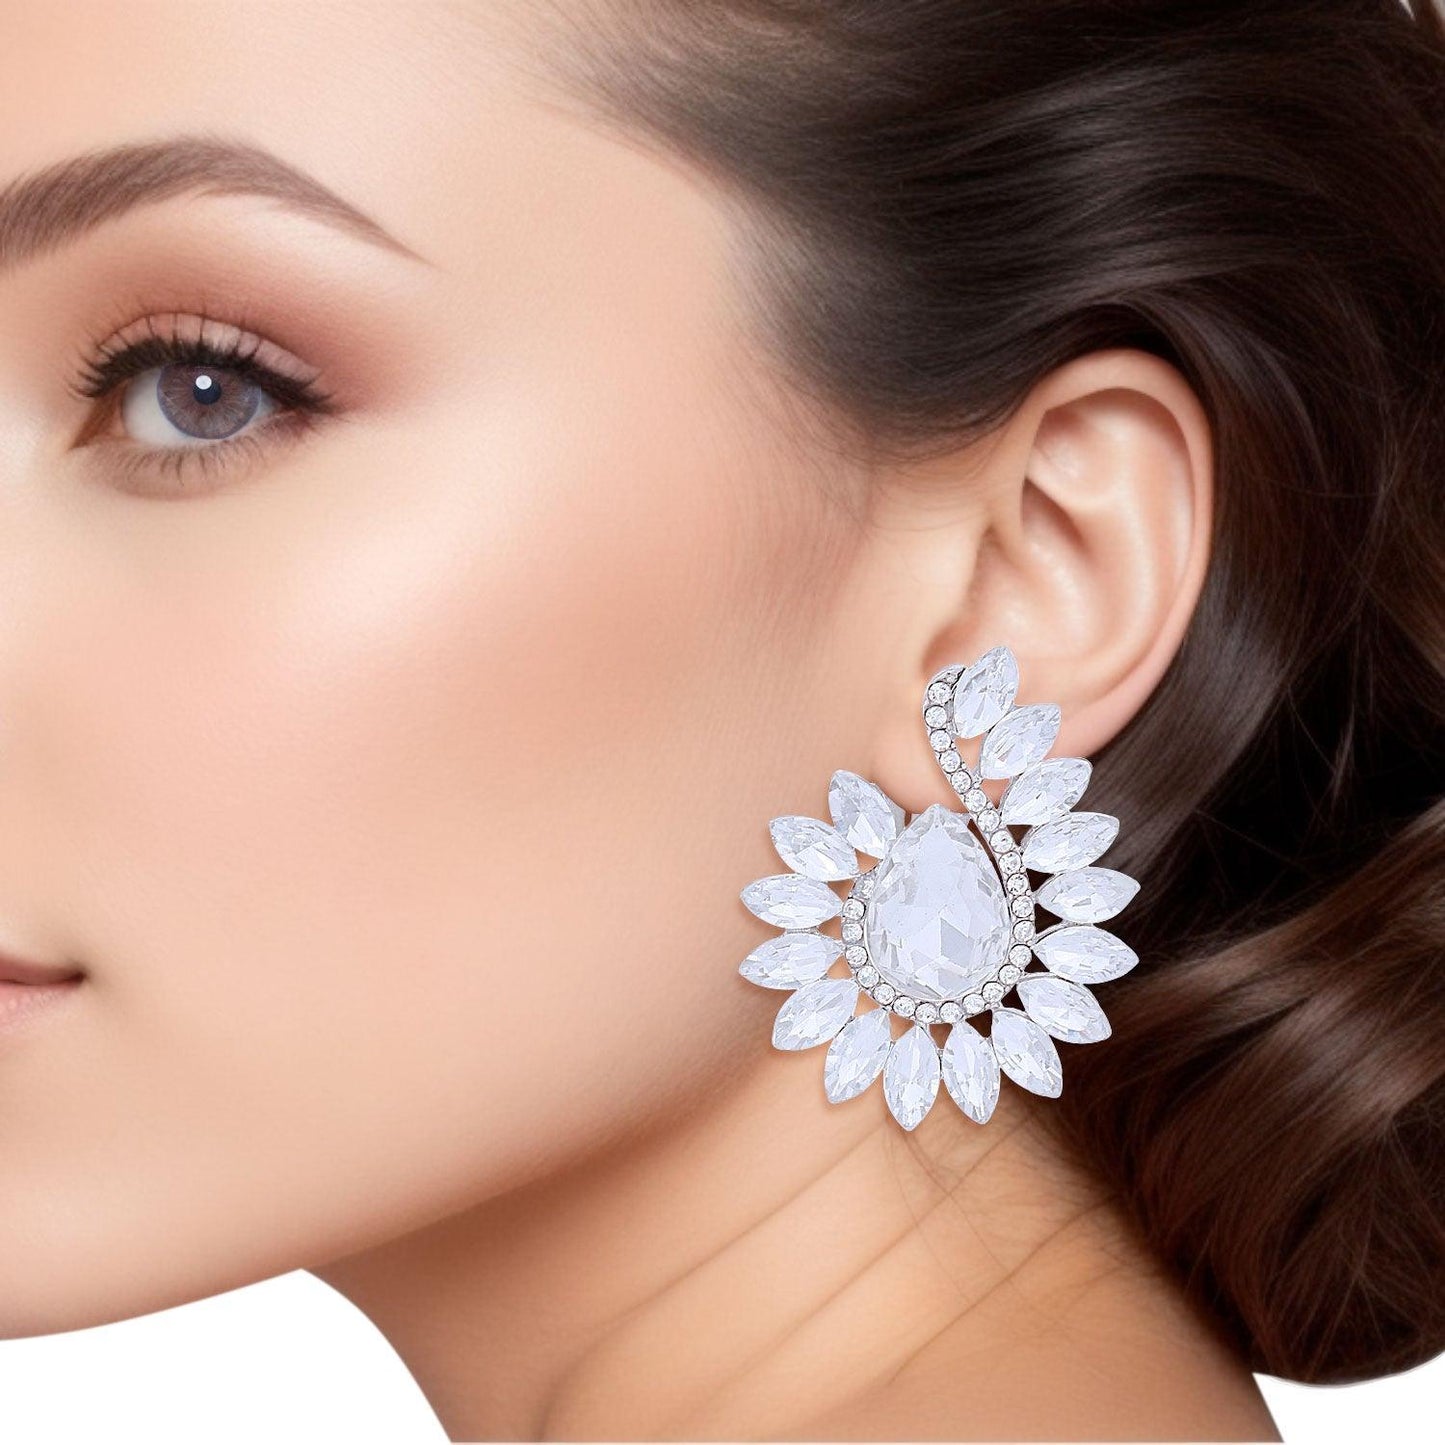 Clear Teardrop Center Clip On Pageant Earrings for Elegant Style